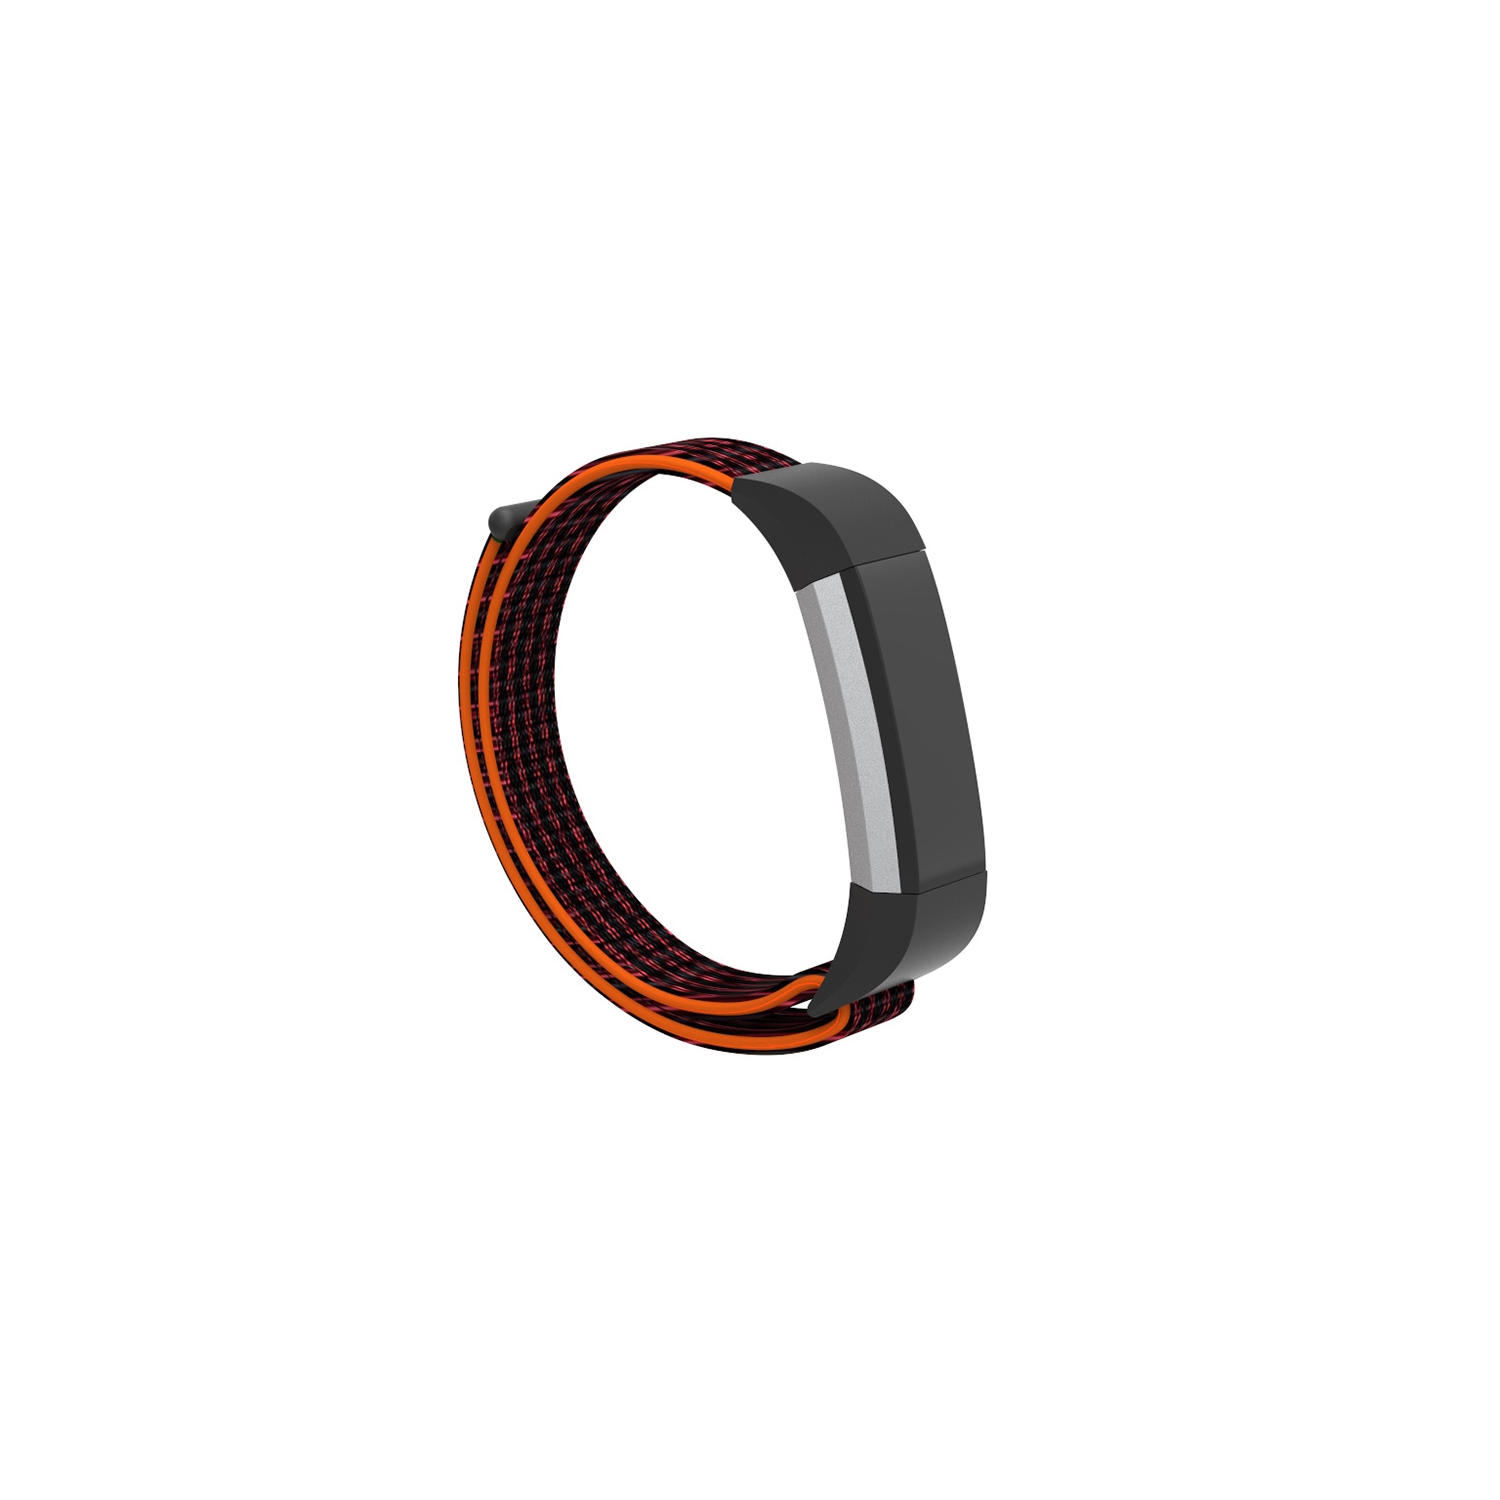 StrapsCo Woven Nylon Watch Band Strap for Fitbit Alta & Alta HR - Black & Red